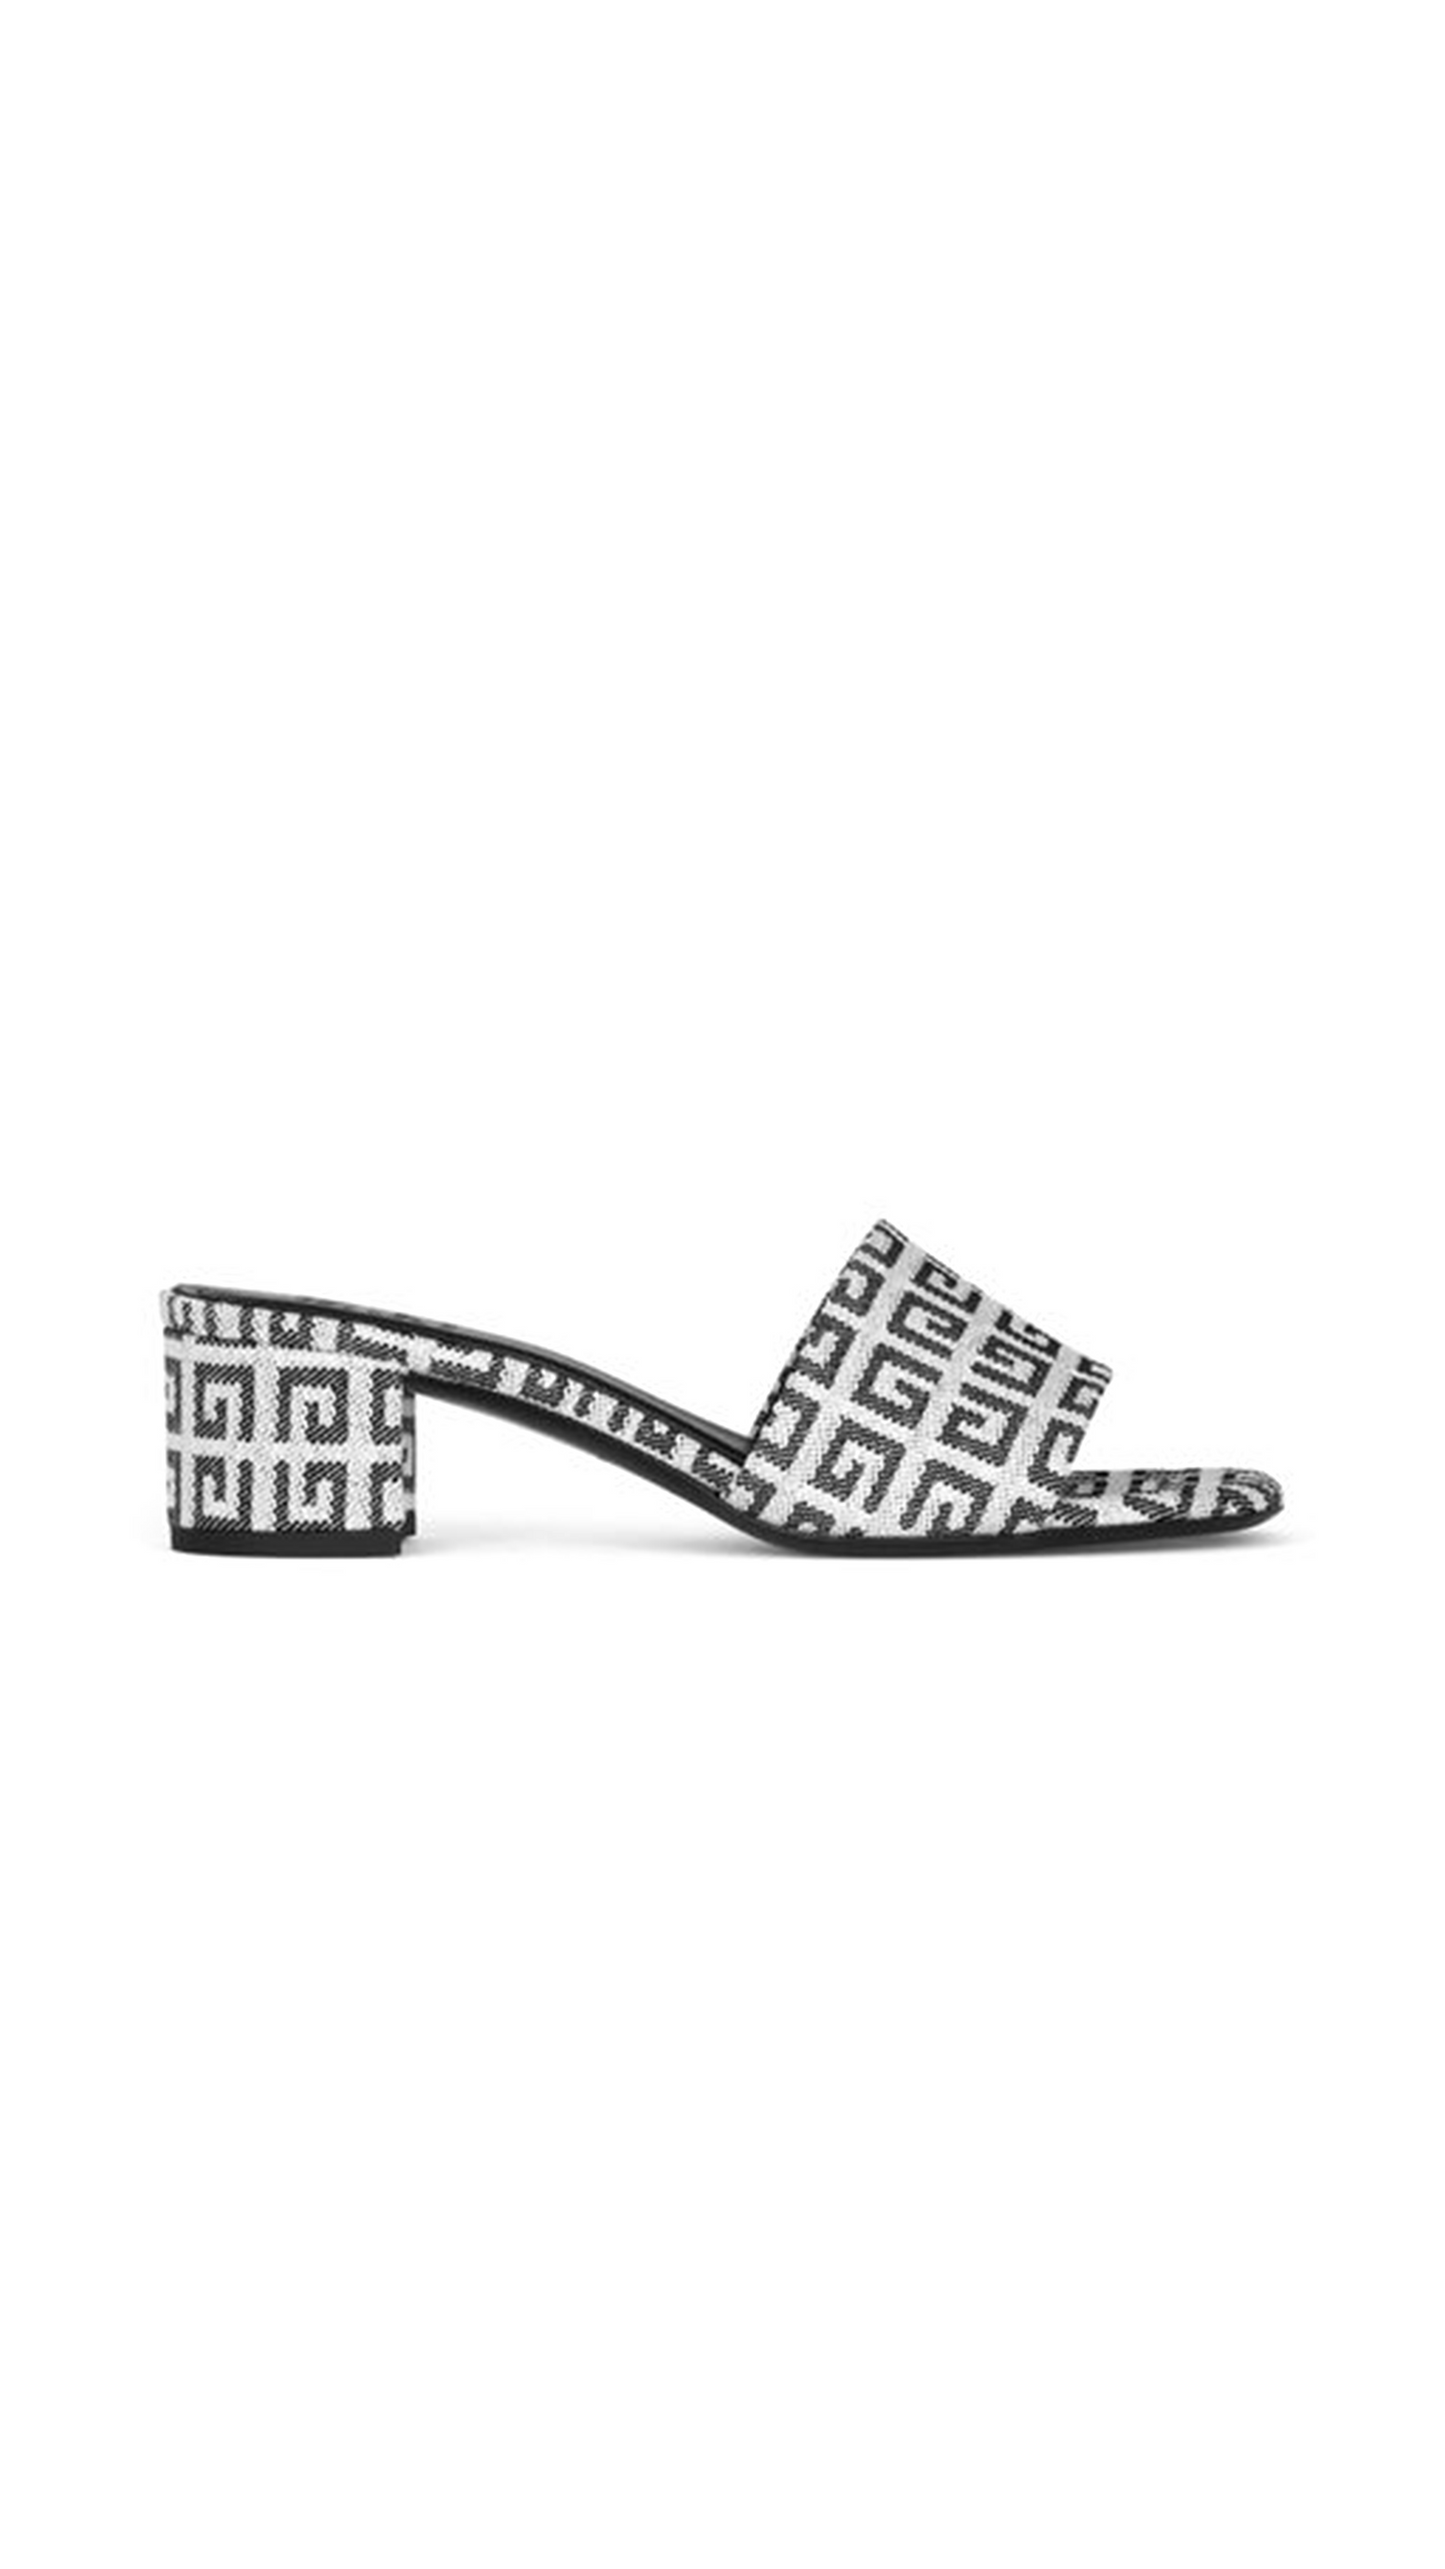 4g Jacquard Mule Sandals - Black / White